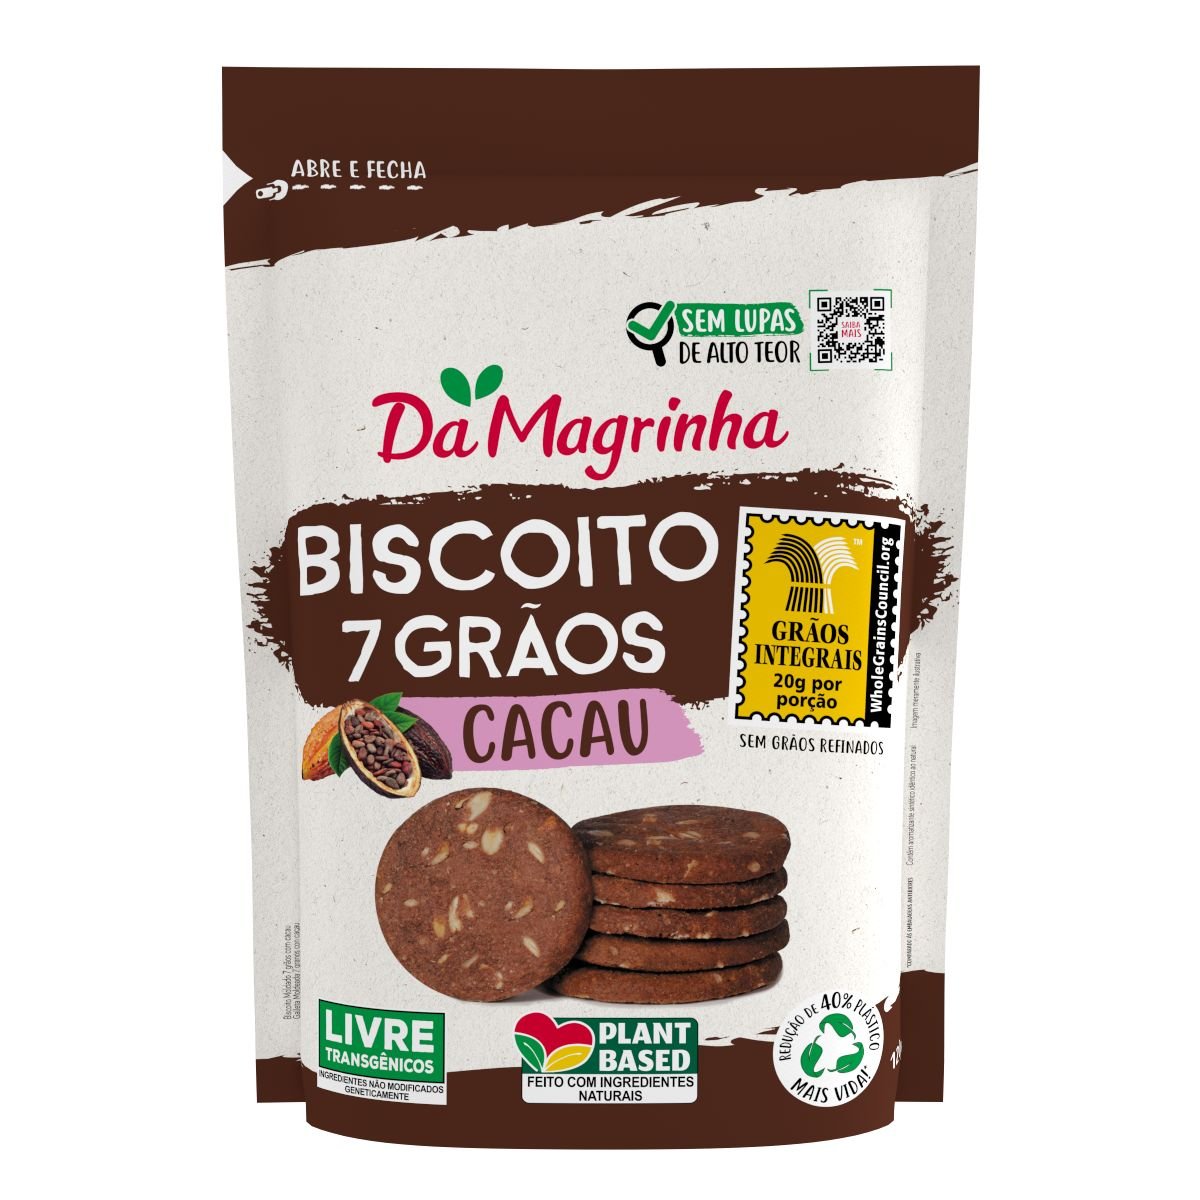 Biscoito Bauducco Cookies Original - 100g